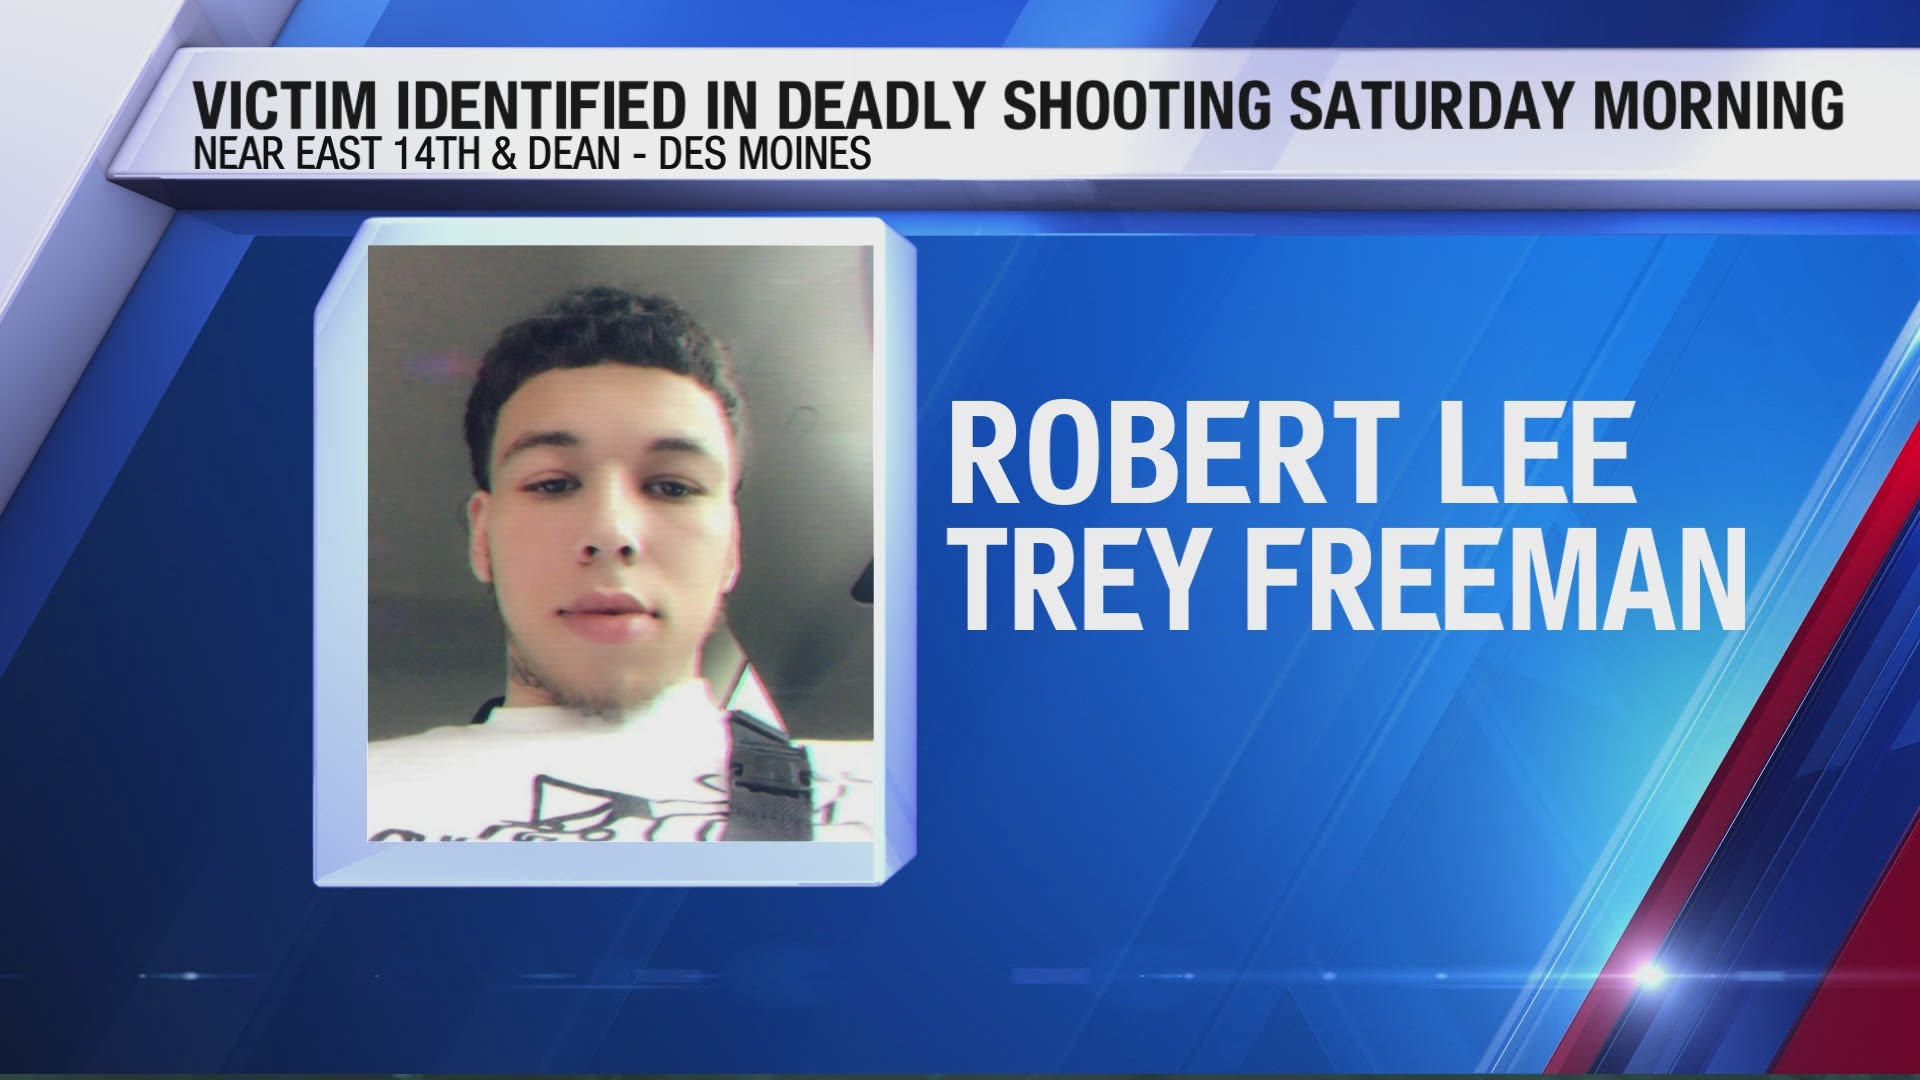 The victim was identified as Robert Lee Trey Freeman.  He was 19 years old.